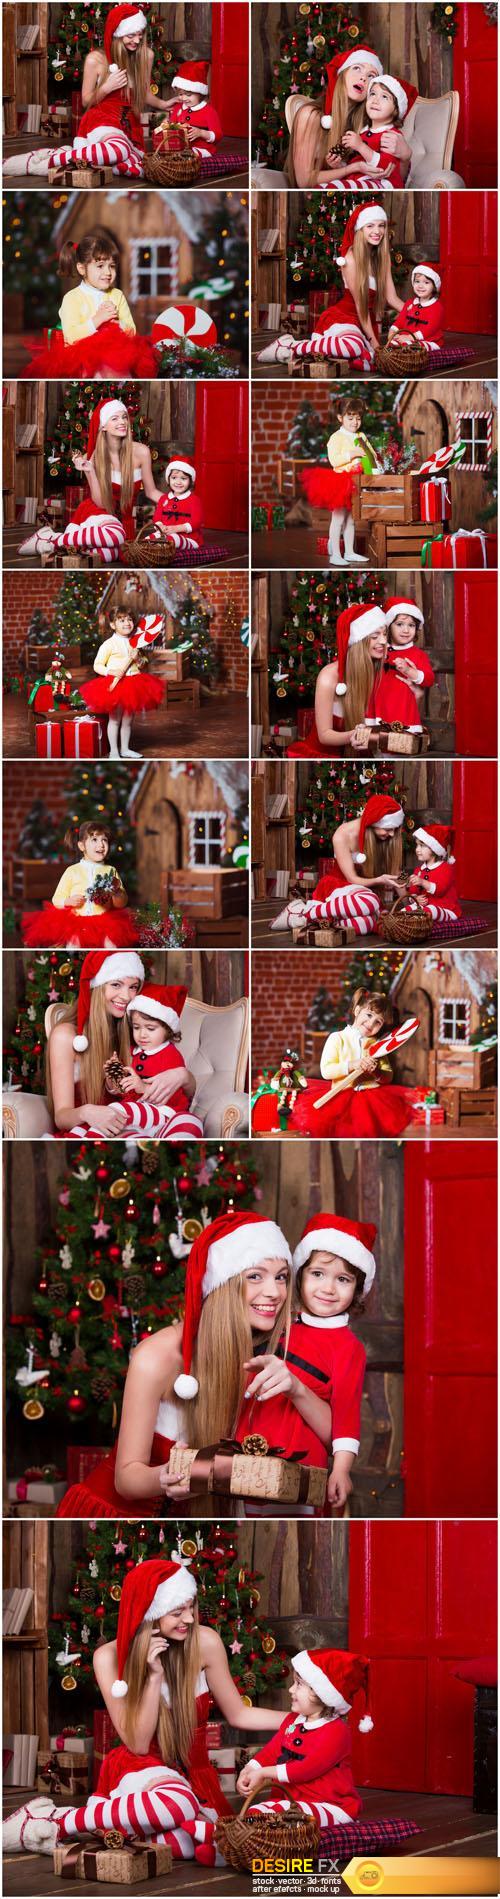 Cute girls sitting with presents near Christmas tree in Santa costumes - 14xUHQ JPEG